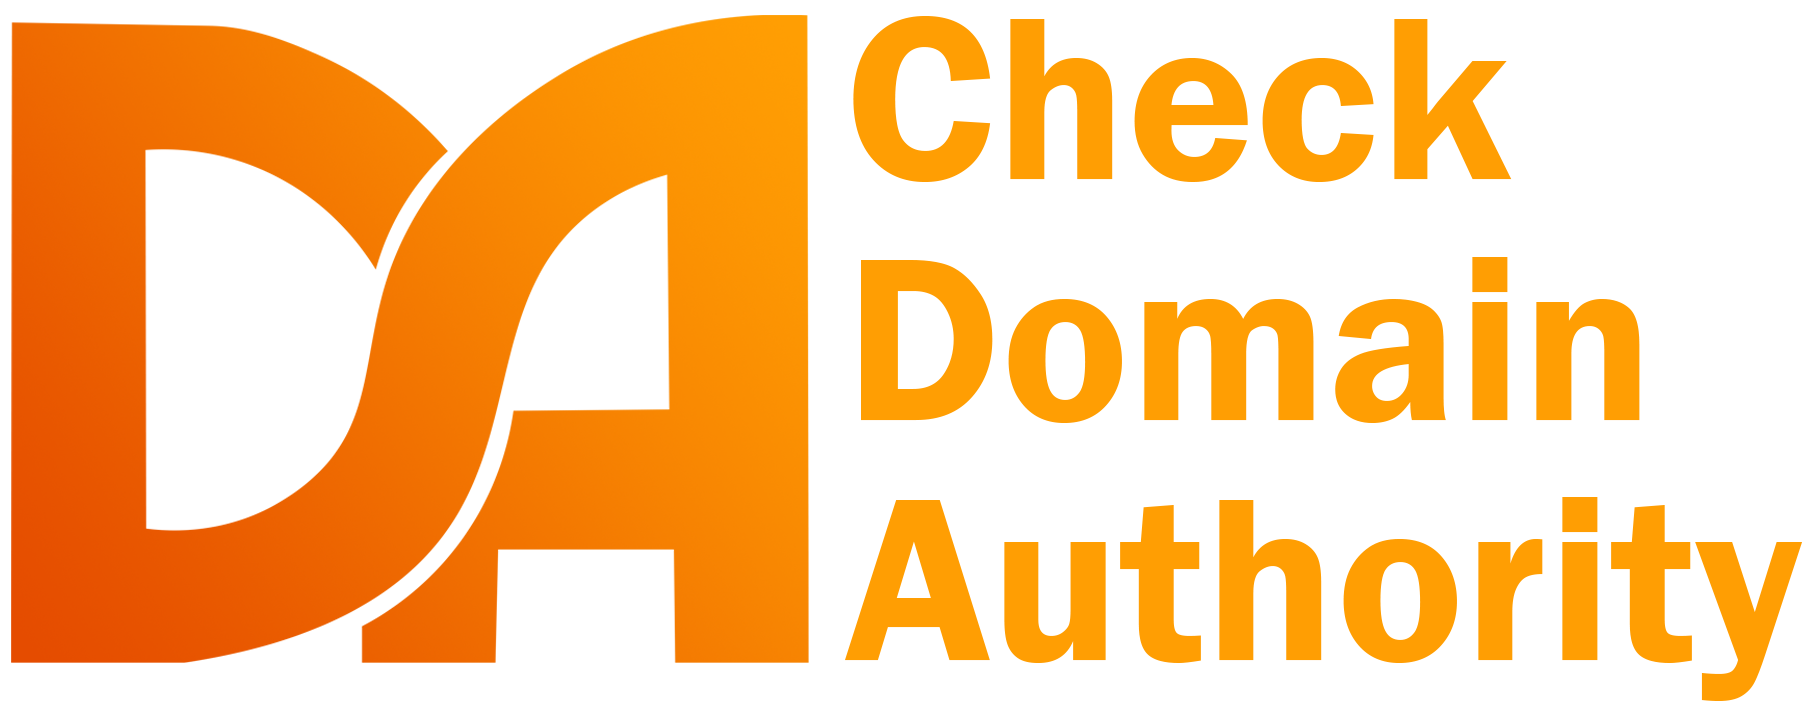 Check Domain Authority